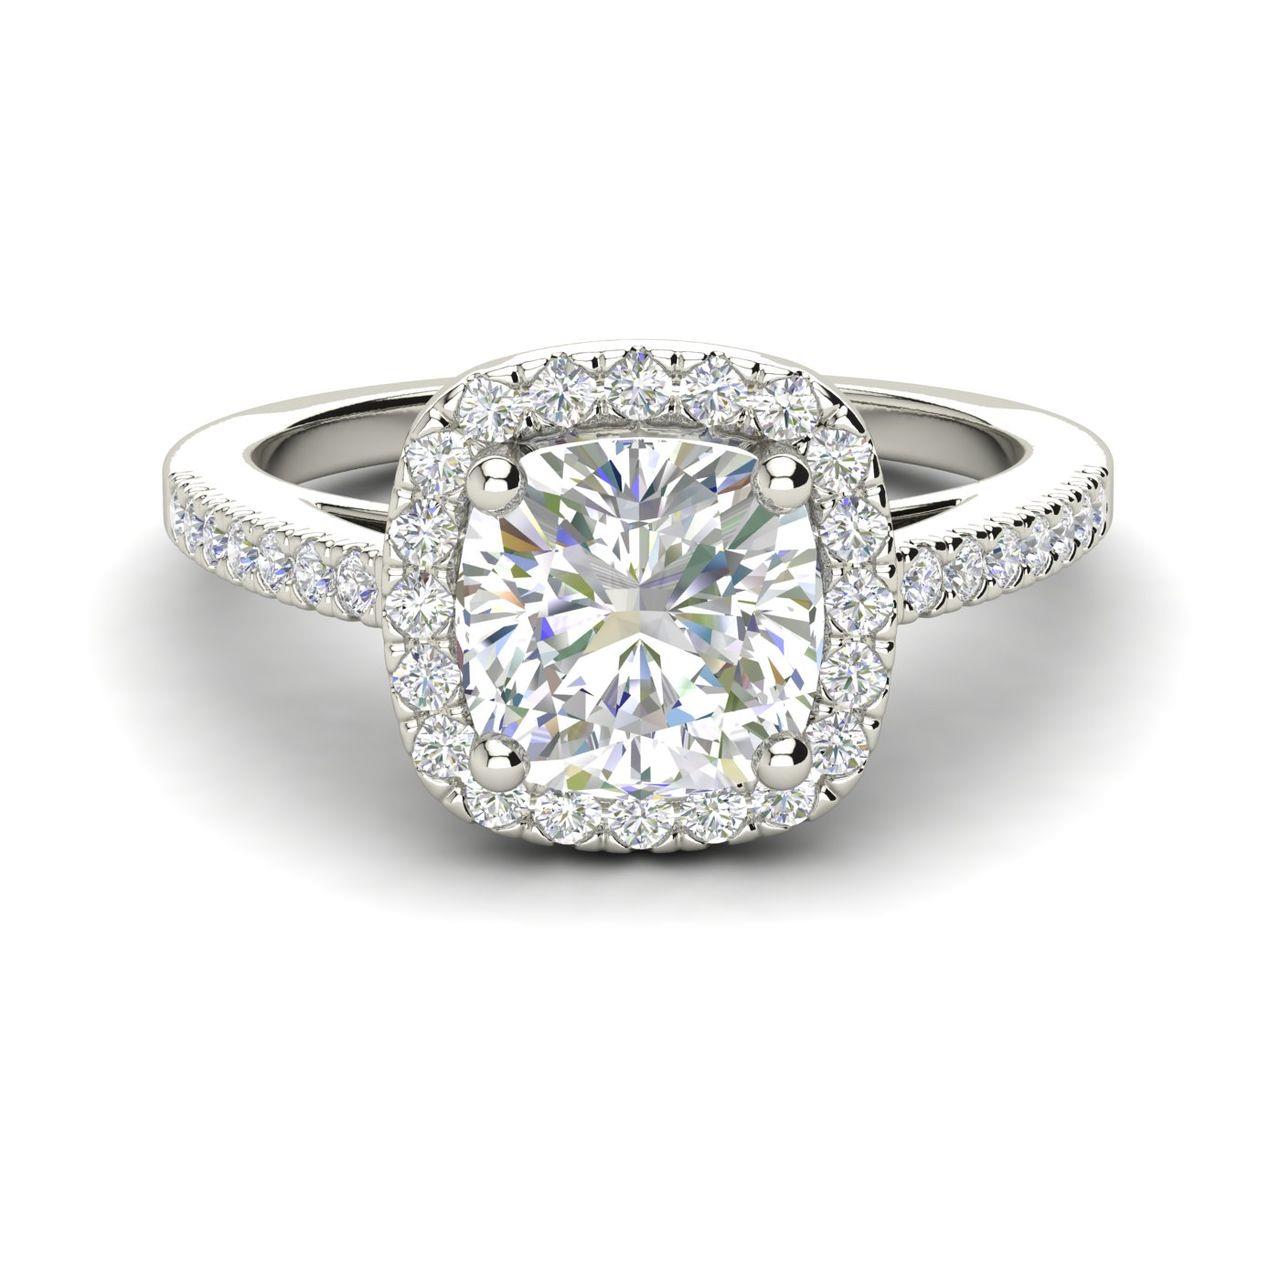 Halo 1.95 Carat Cushion Cut Diamond Engagement Ring